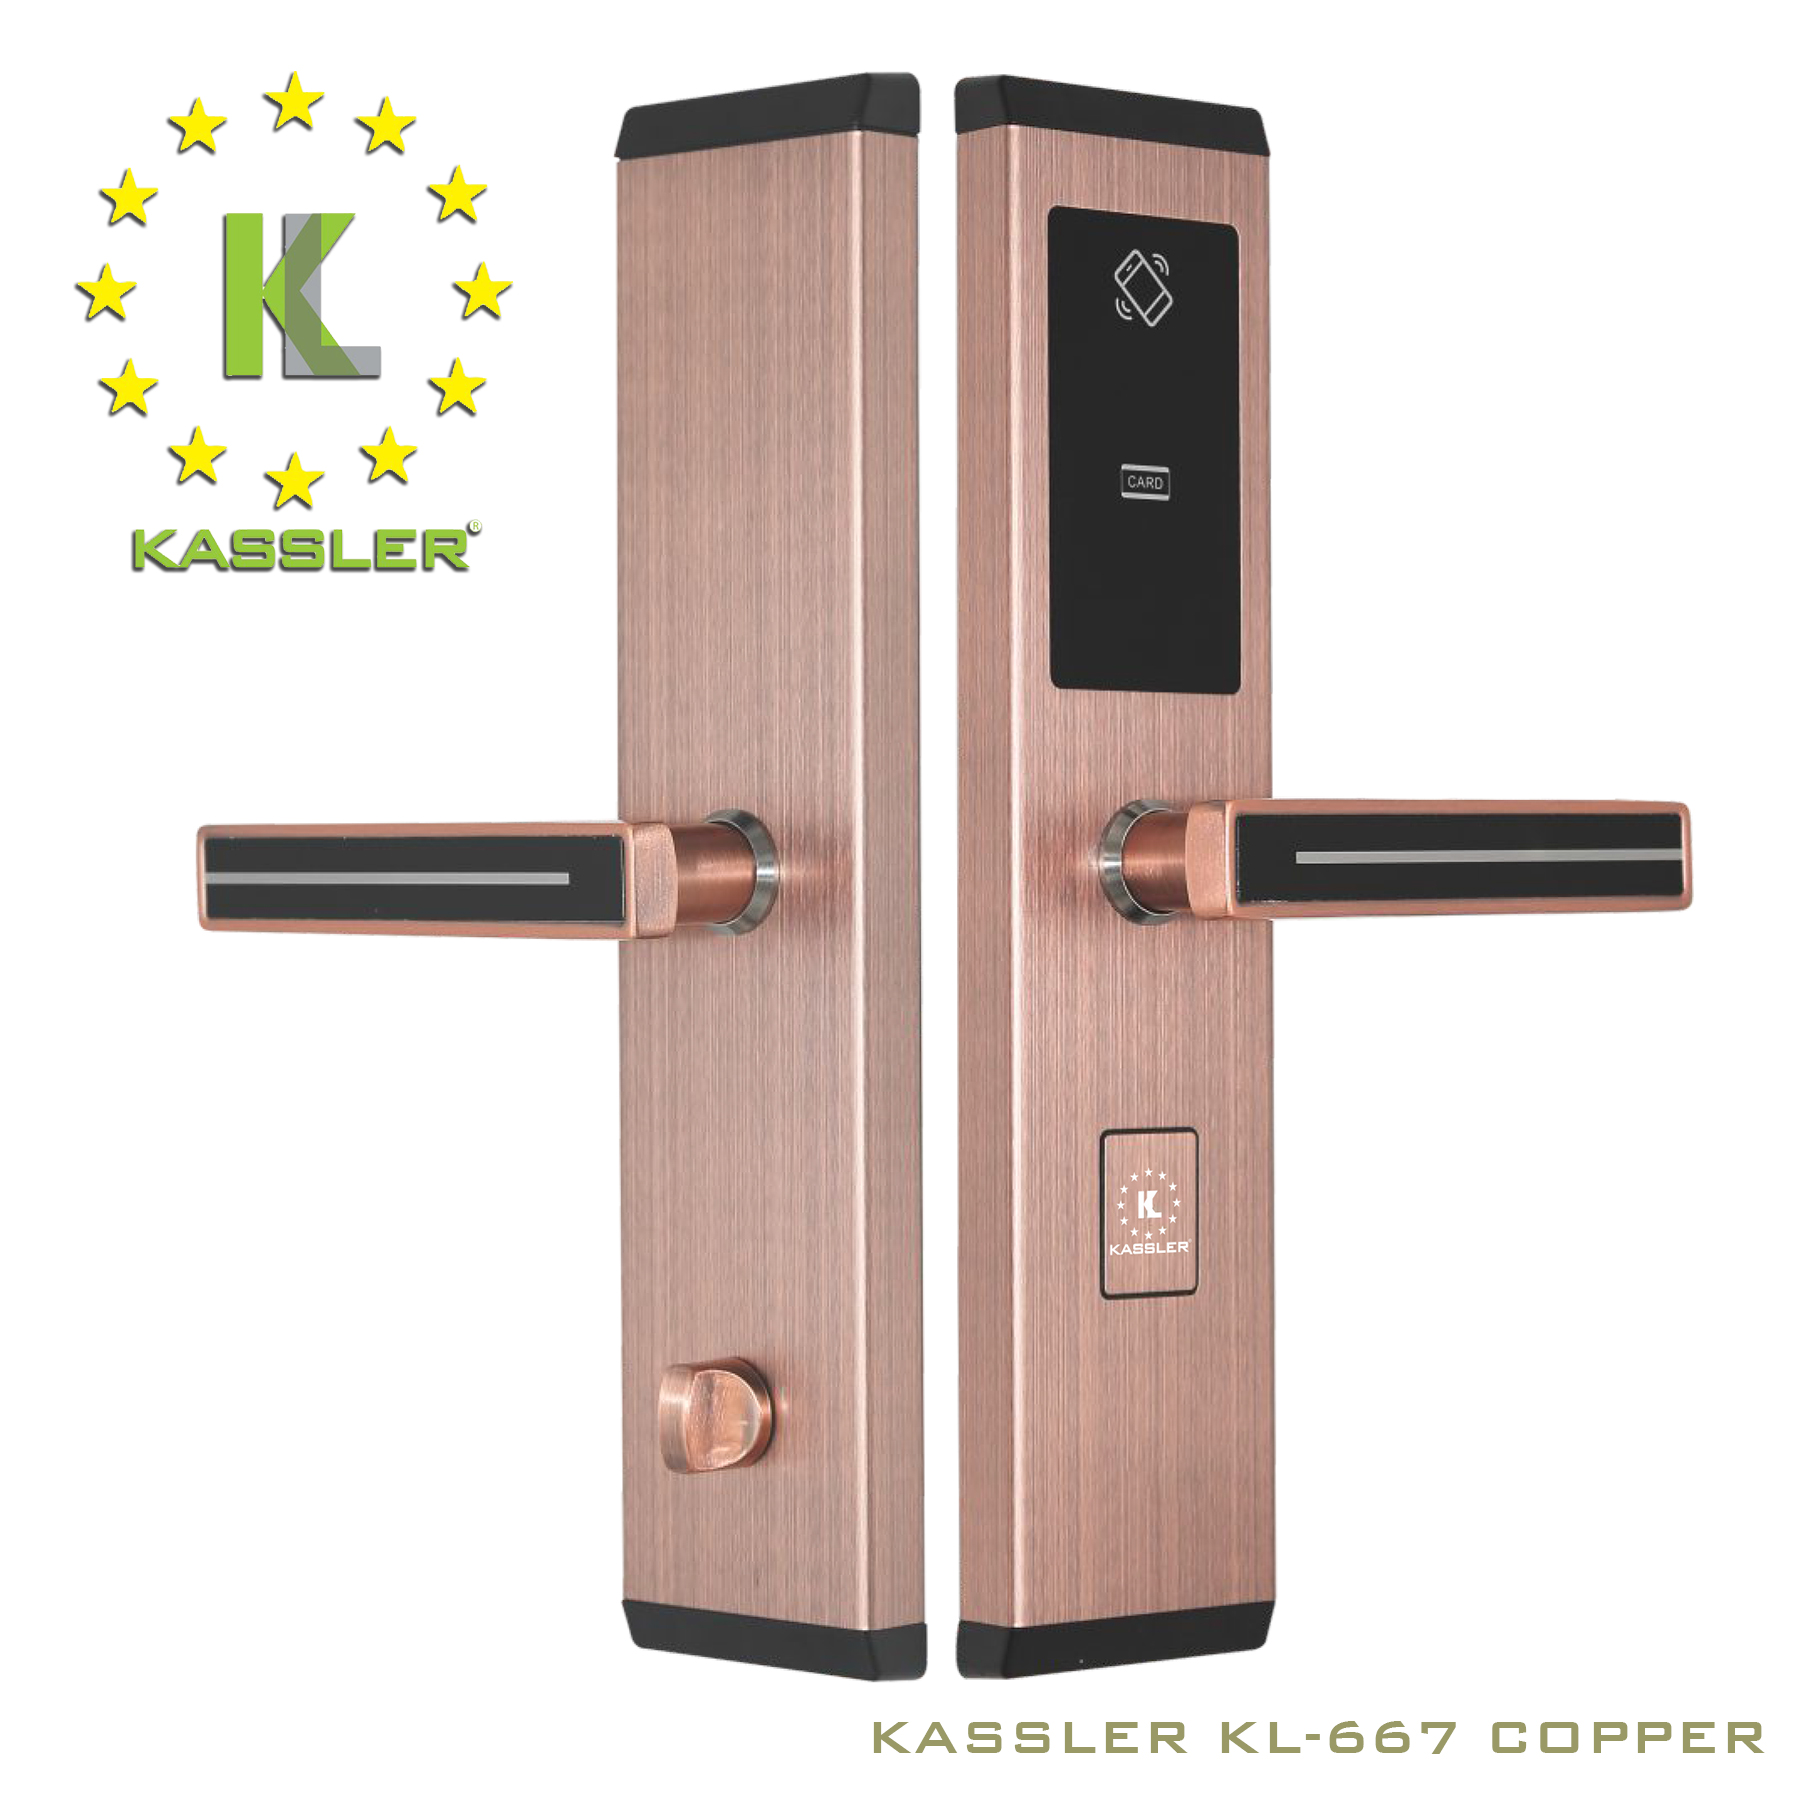 Kassler-KL-667-copper-tpcao88